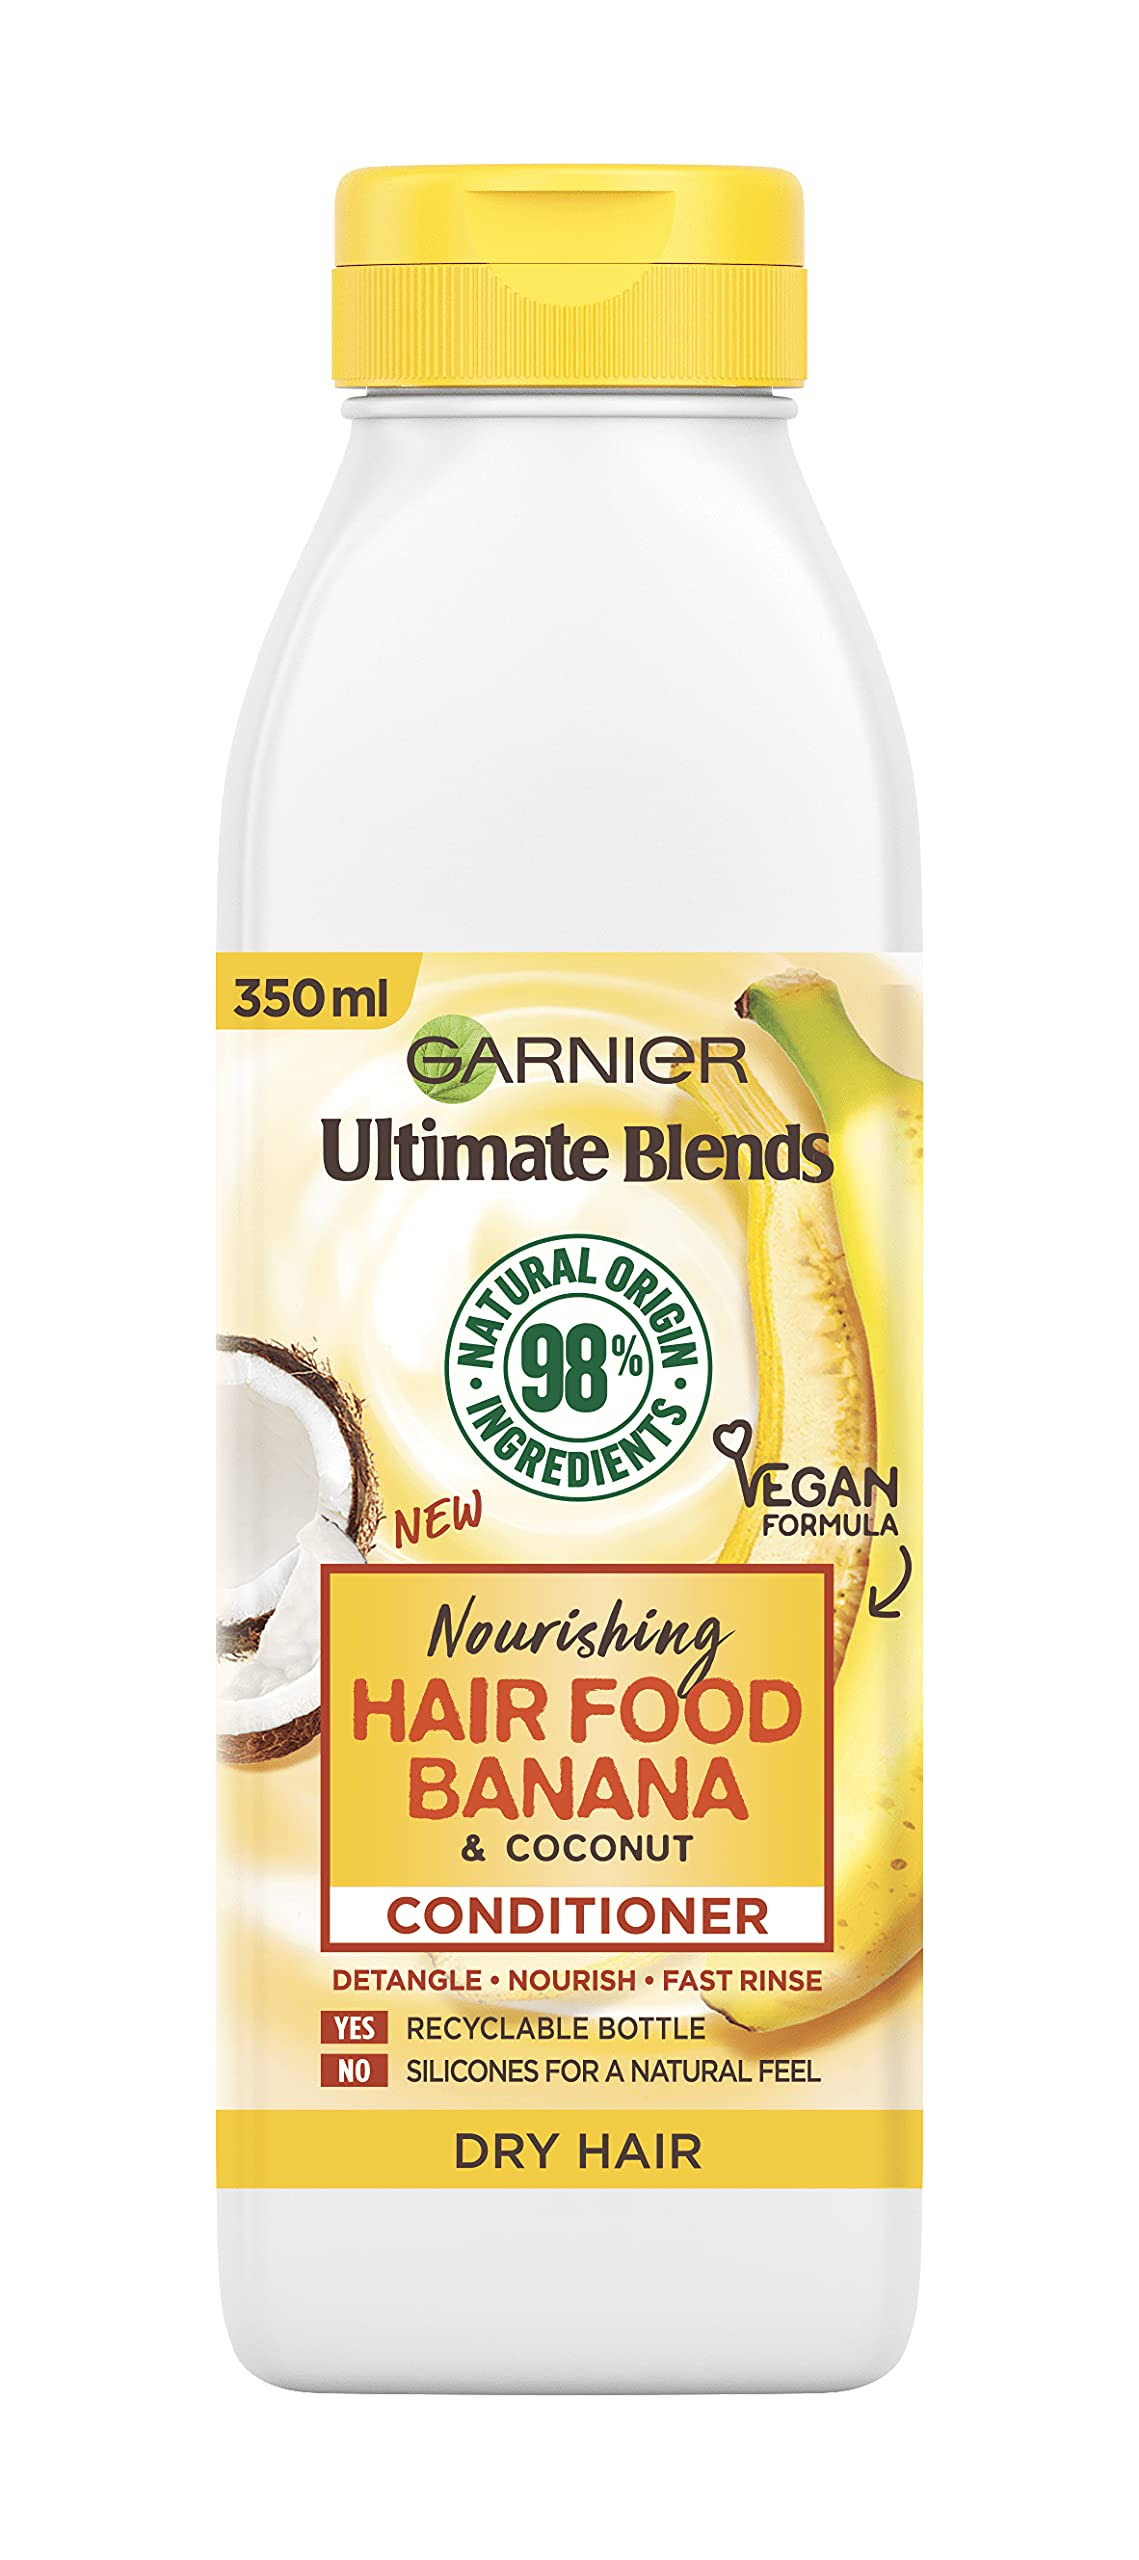 Garnier Ultimate Blends Nourishing Hair Food Banana Conditioner 350ml